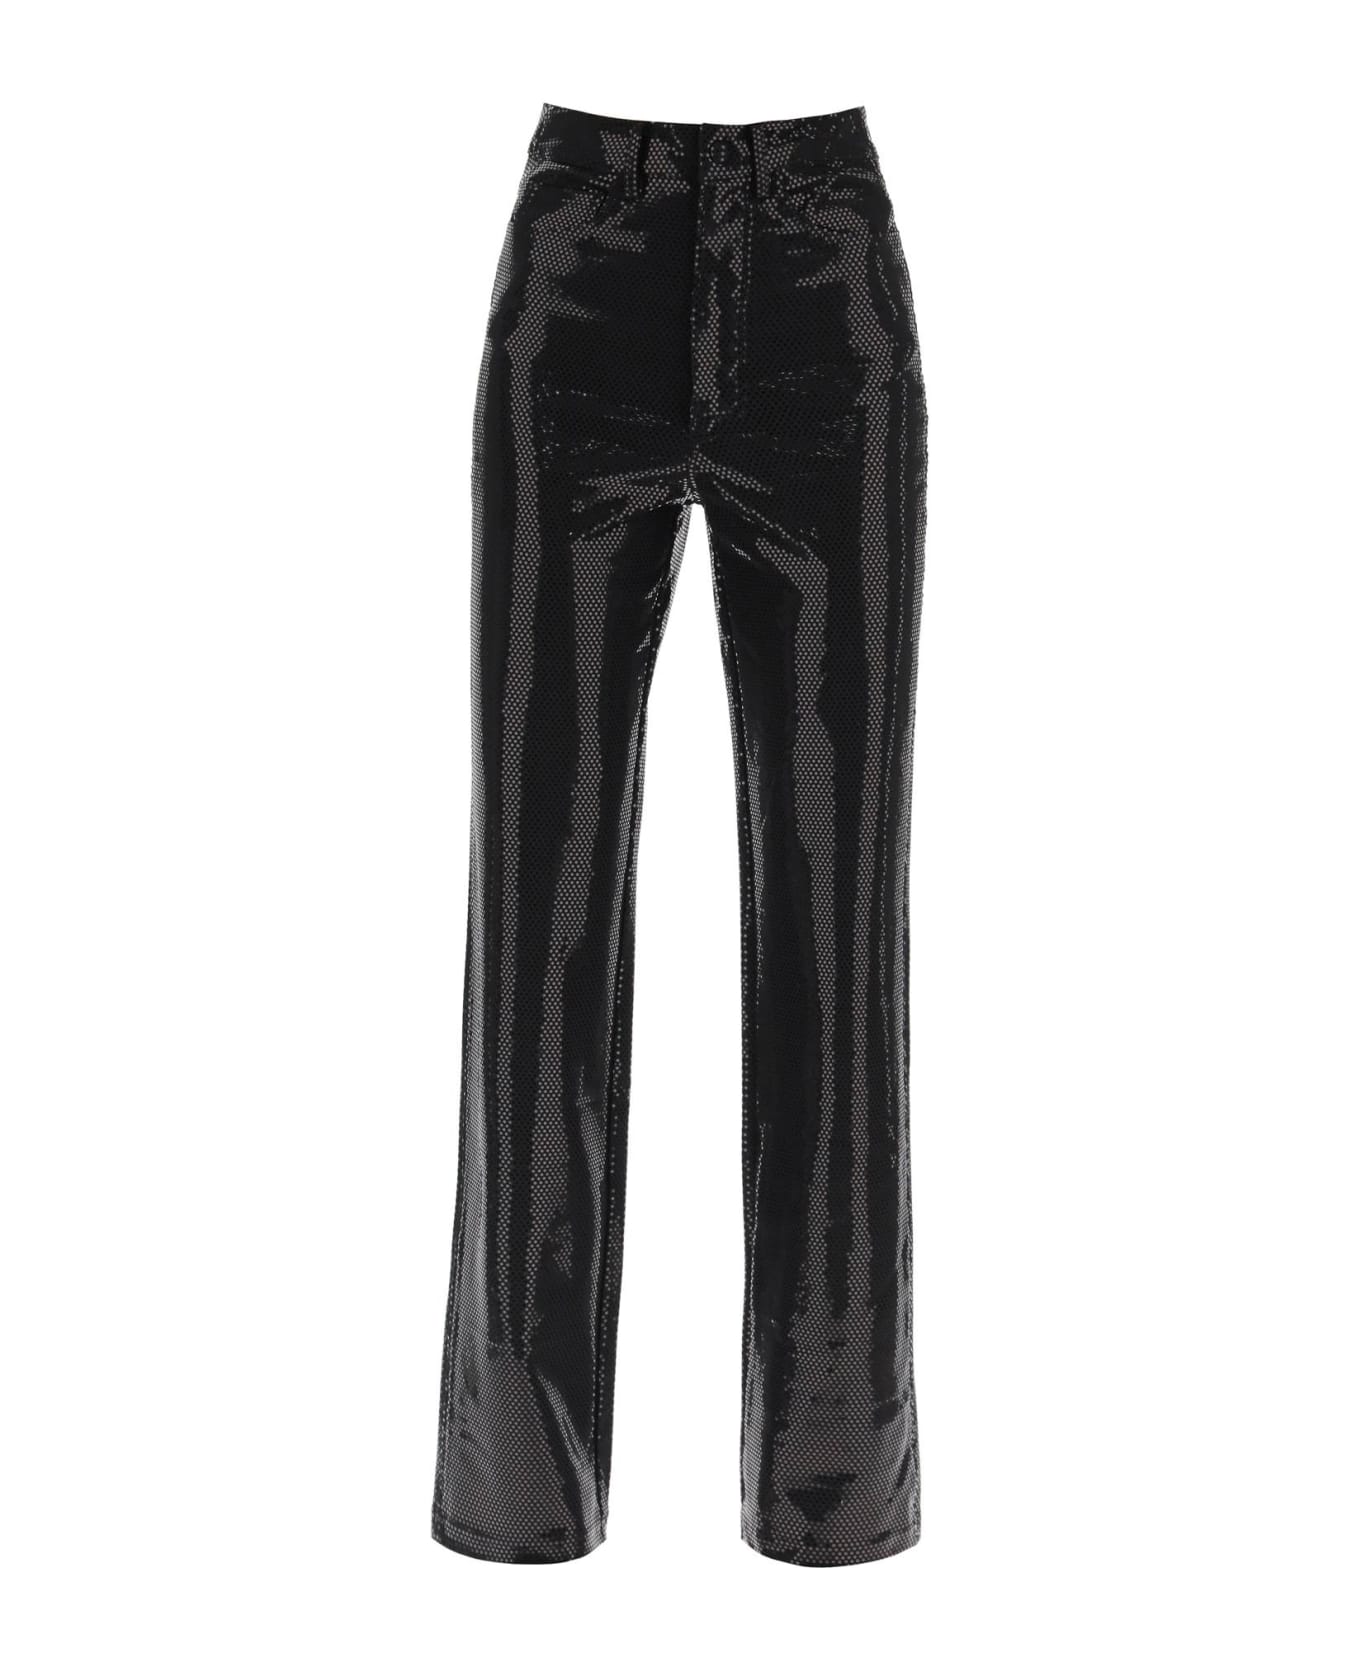 Rotate by Birger Christensen 'rotana' Foil Jersey Pants - BLACK (Black)